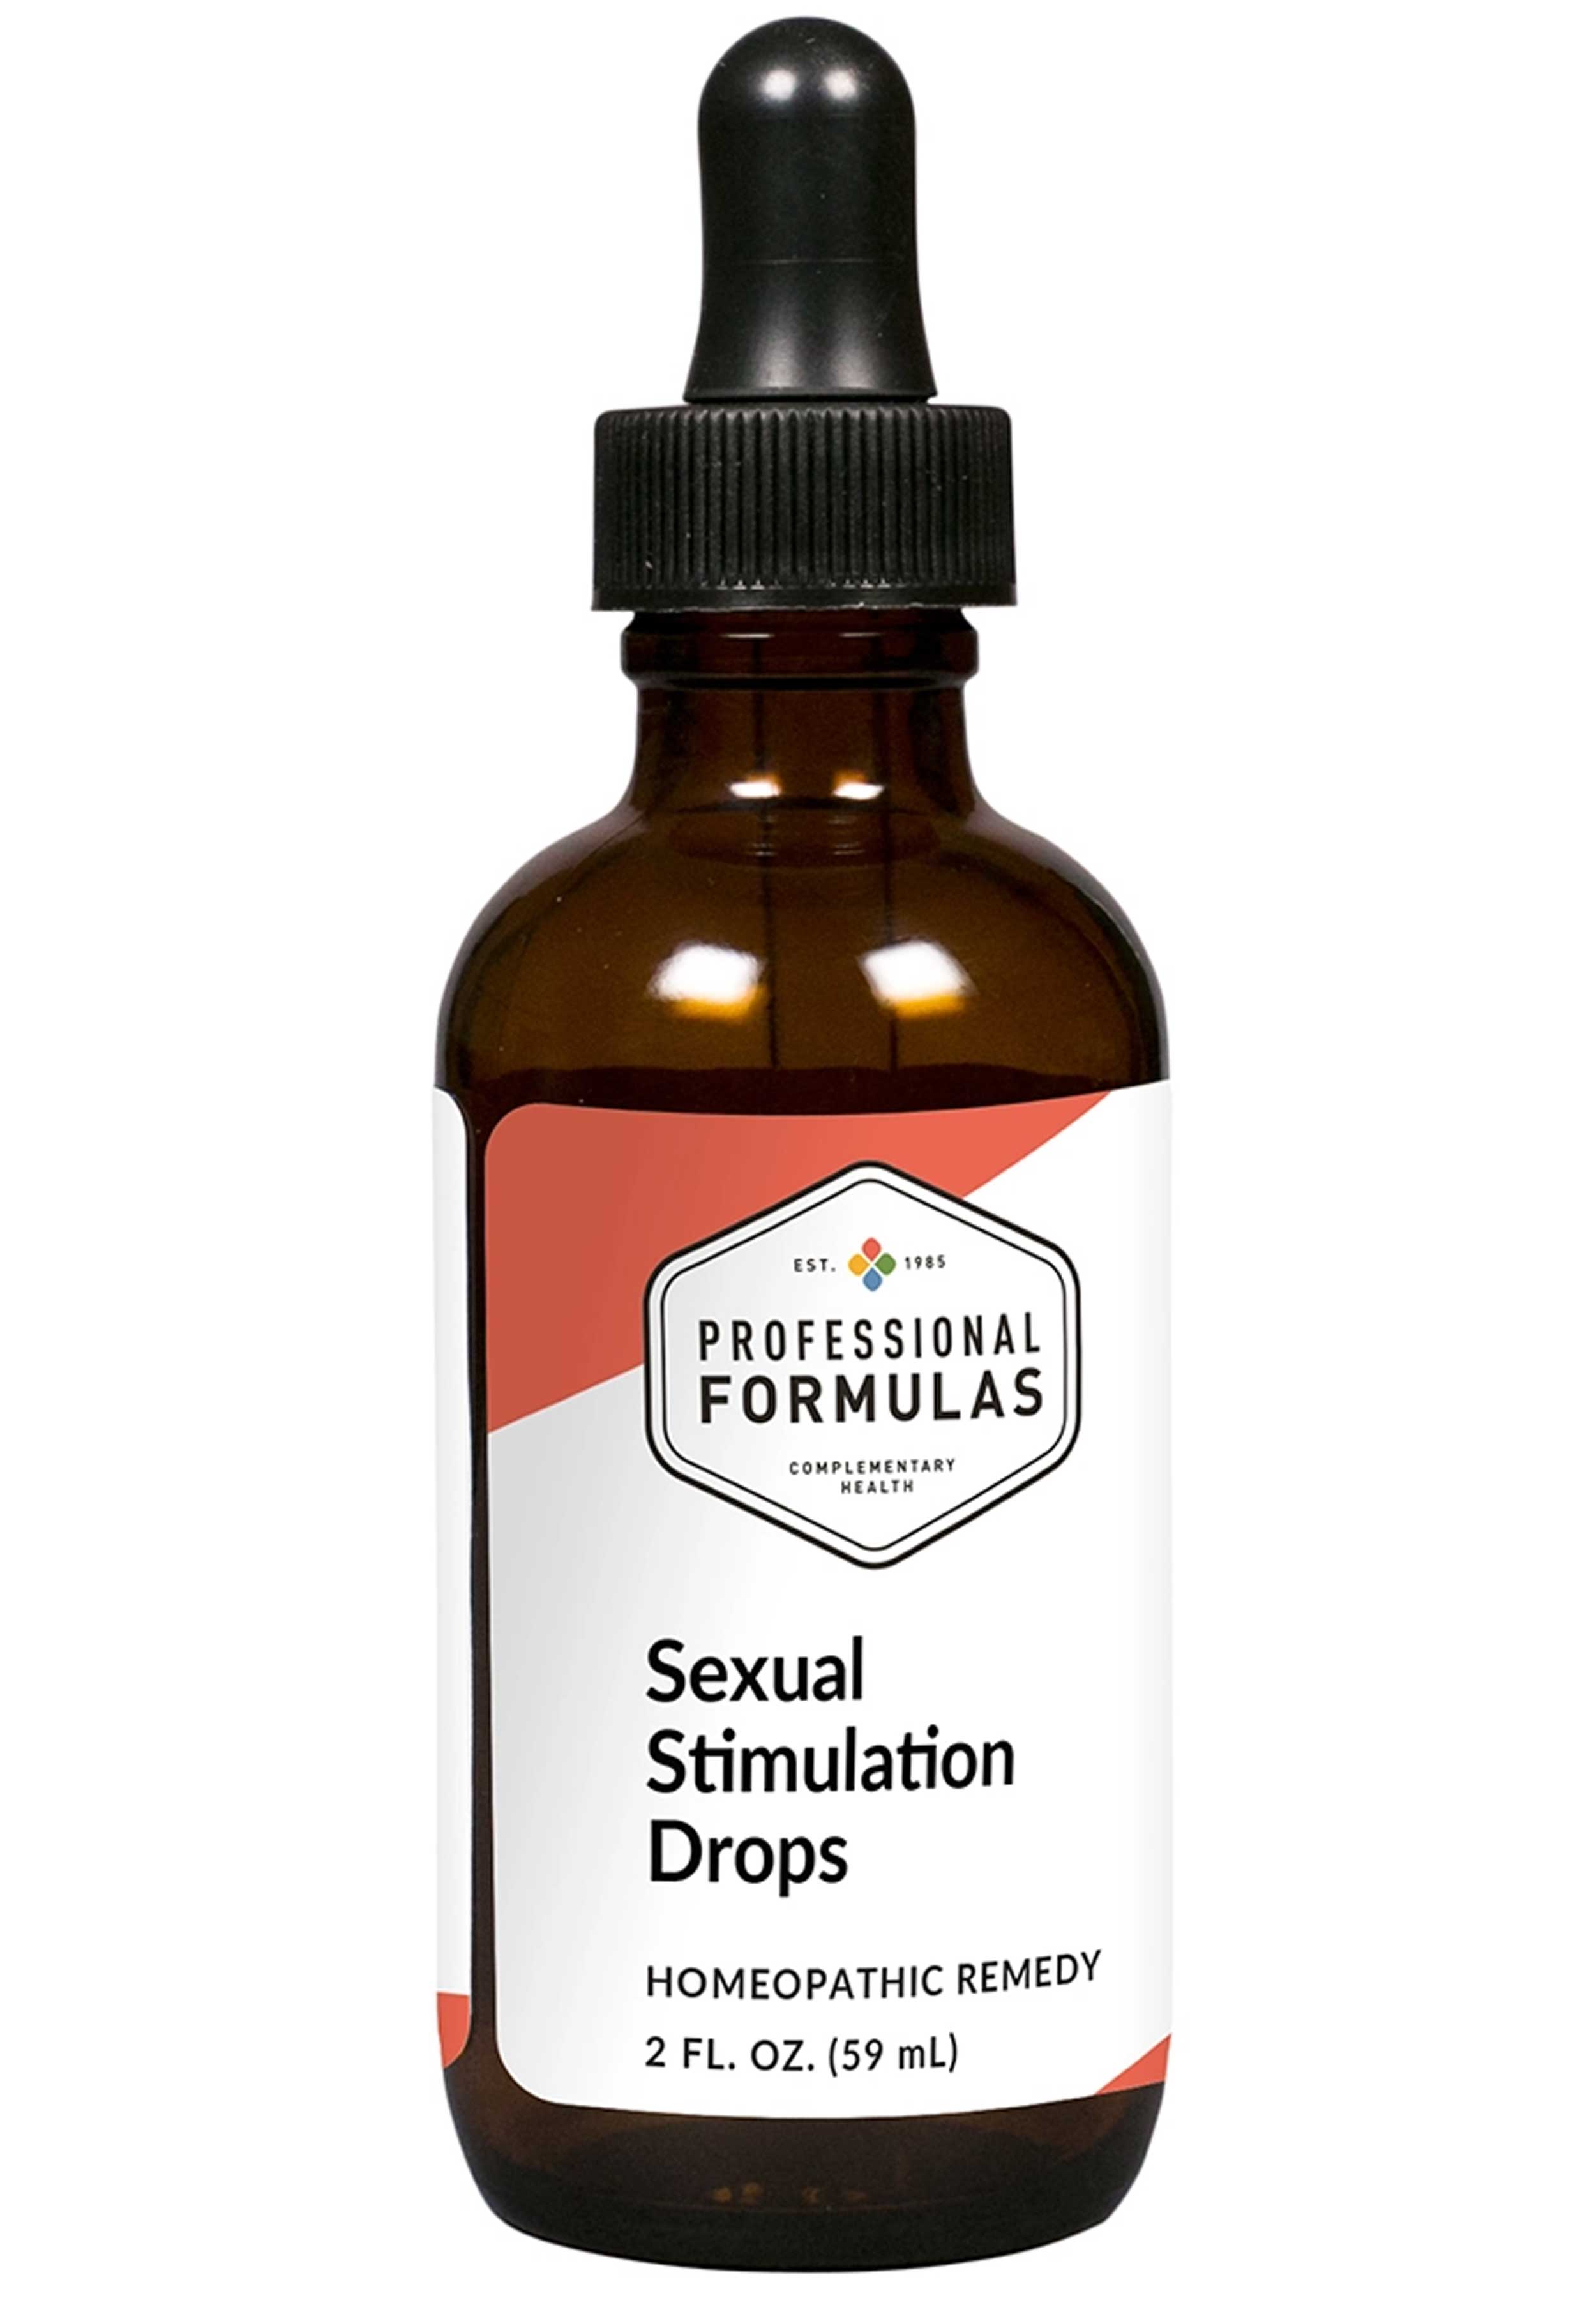 Professional Formulas Sexual Stimulation Drops